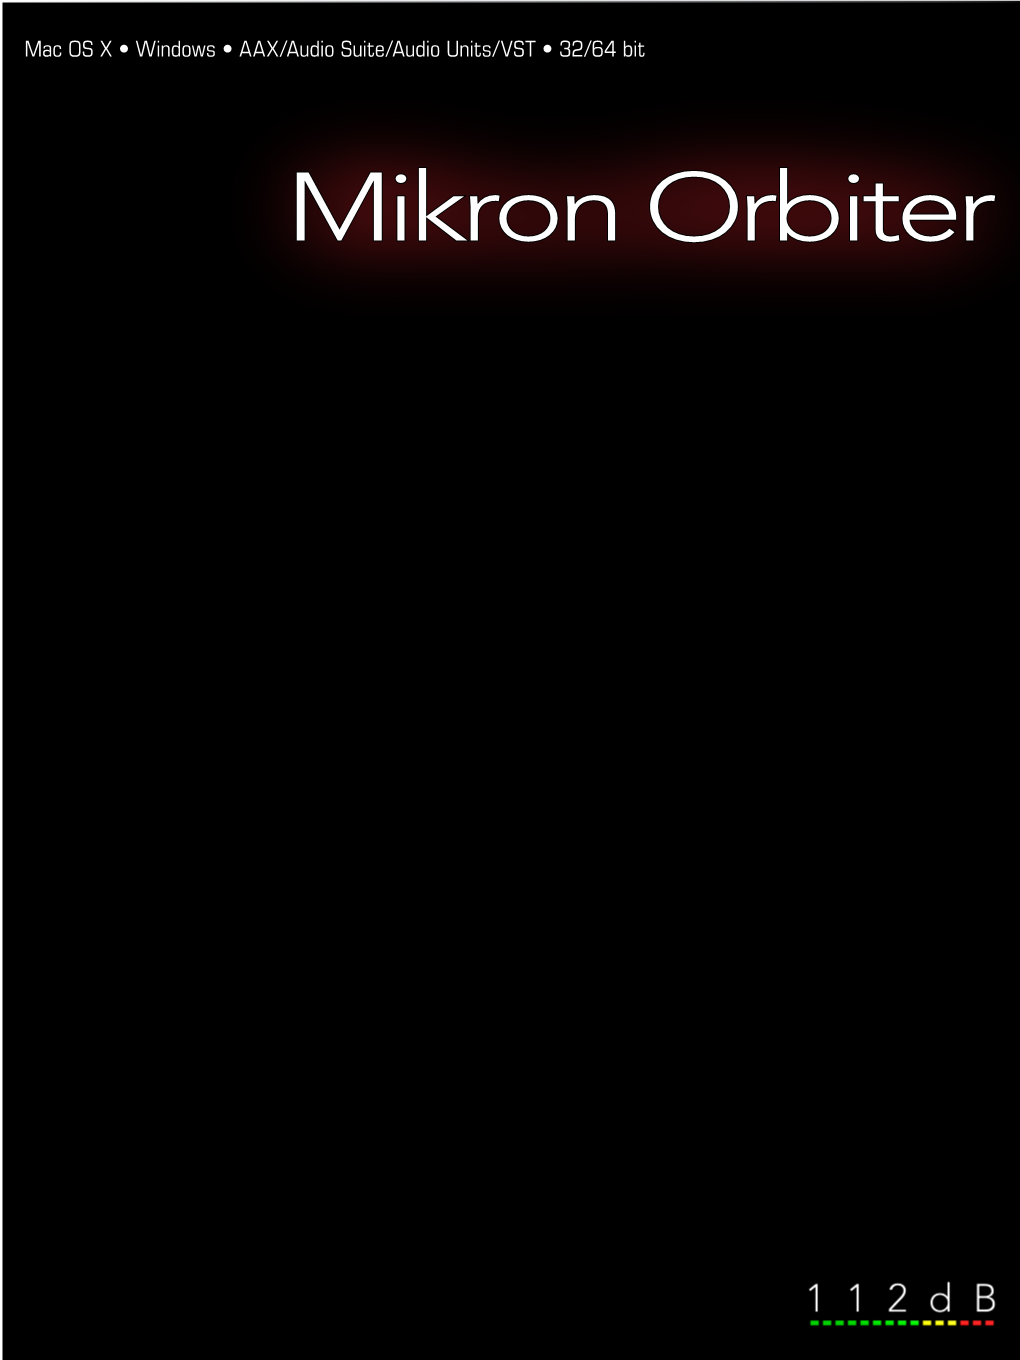 Mikron Orbiter Q U I C K I N D E X